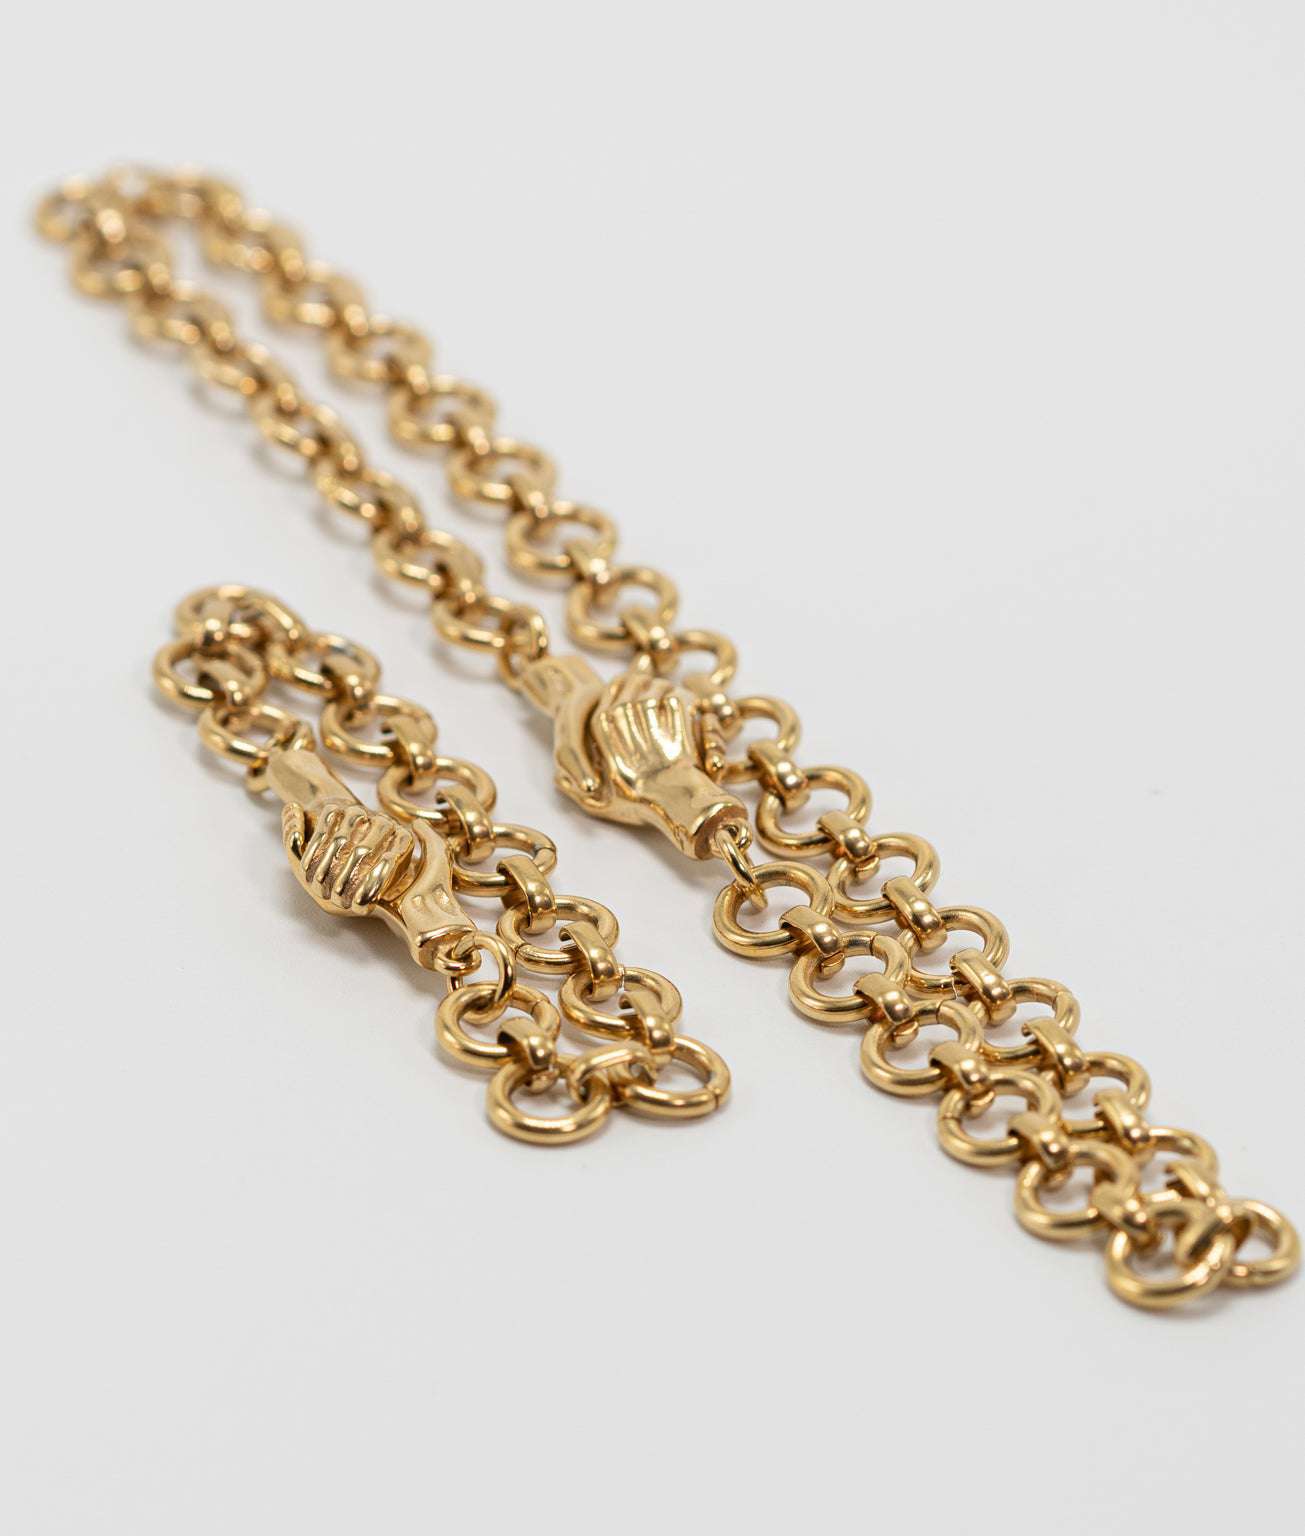 Rolo Chain Hug Necklace and Bracelet Set | ClassicsJewelryGifts